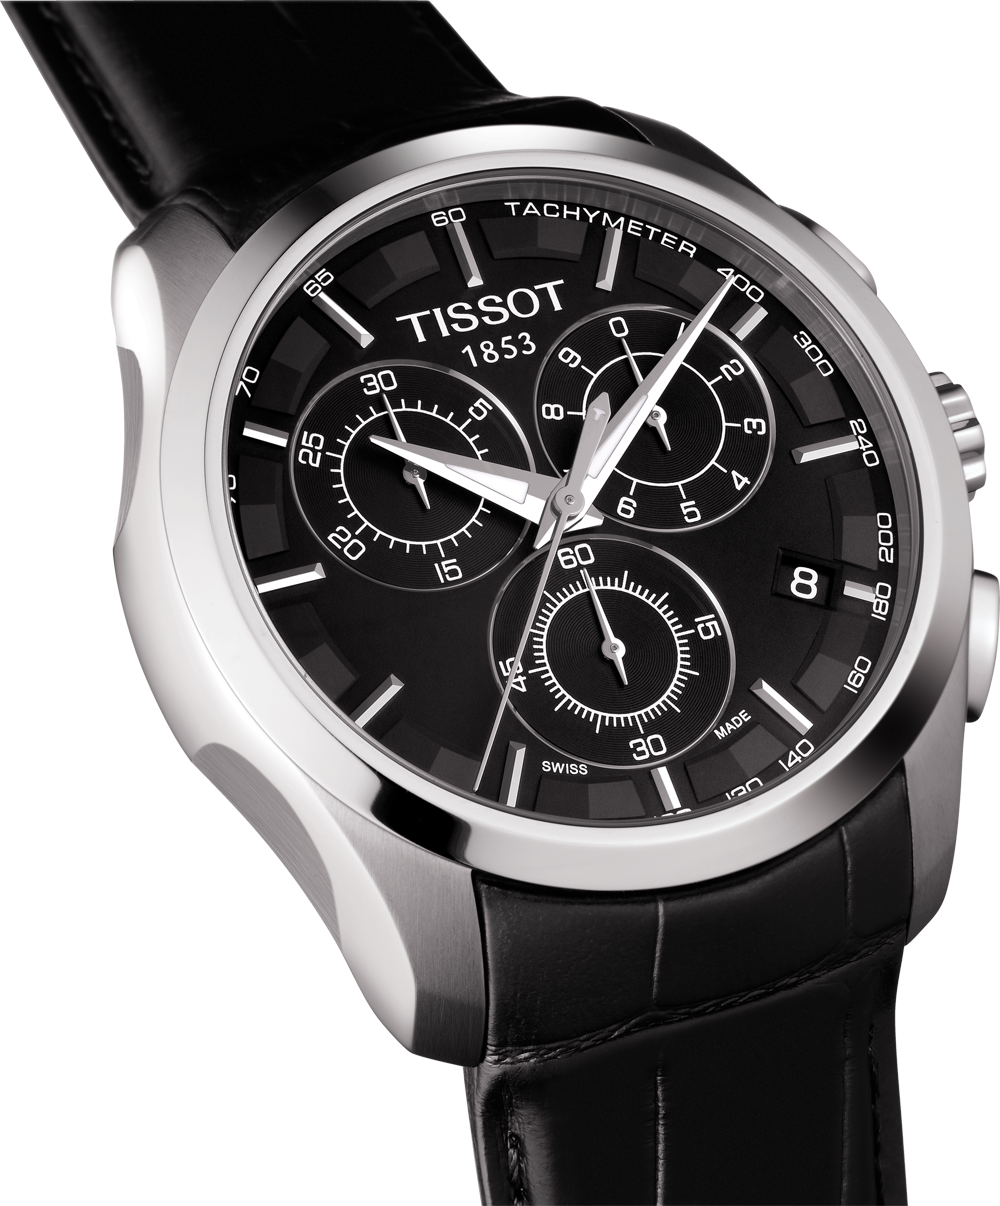 Tissot T035.617.16.051